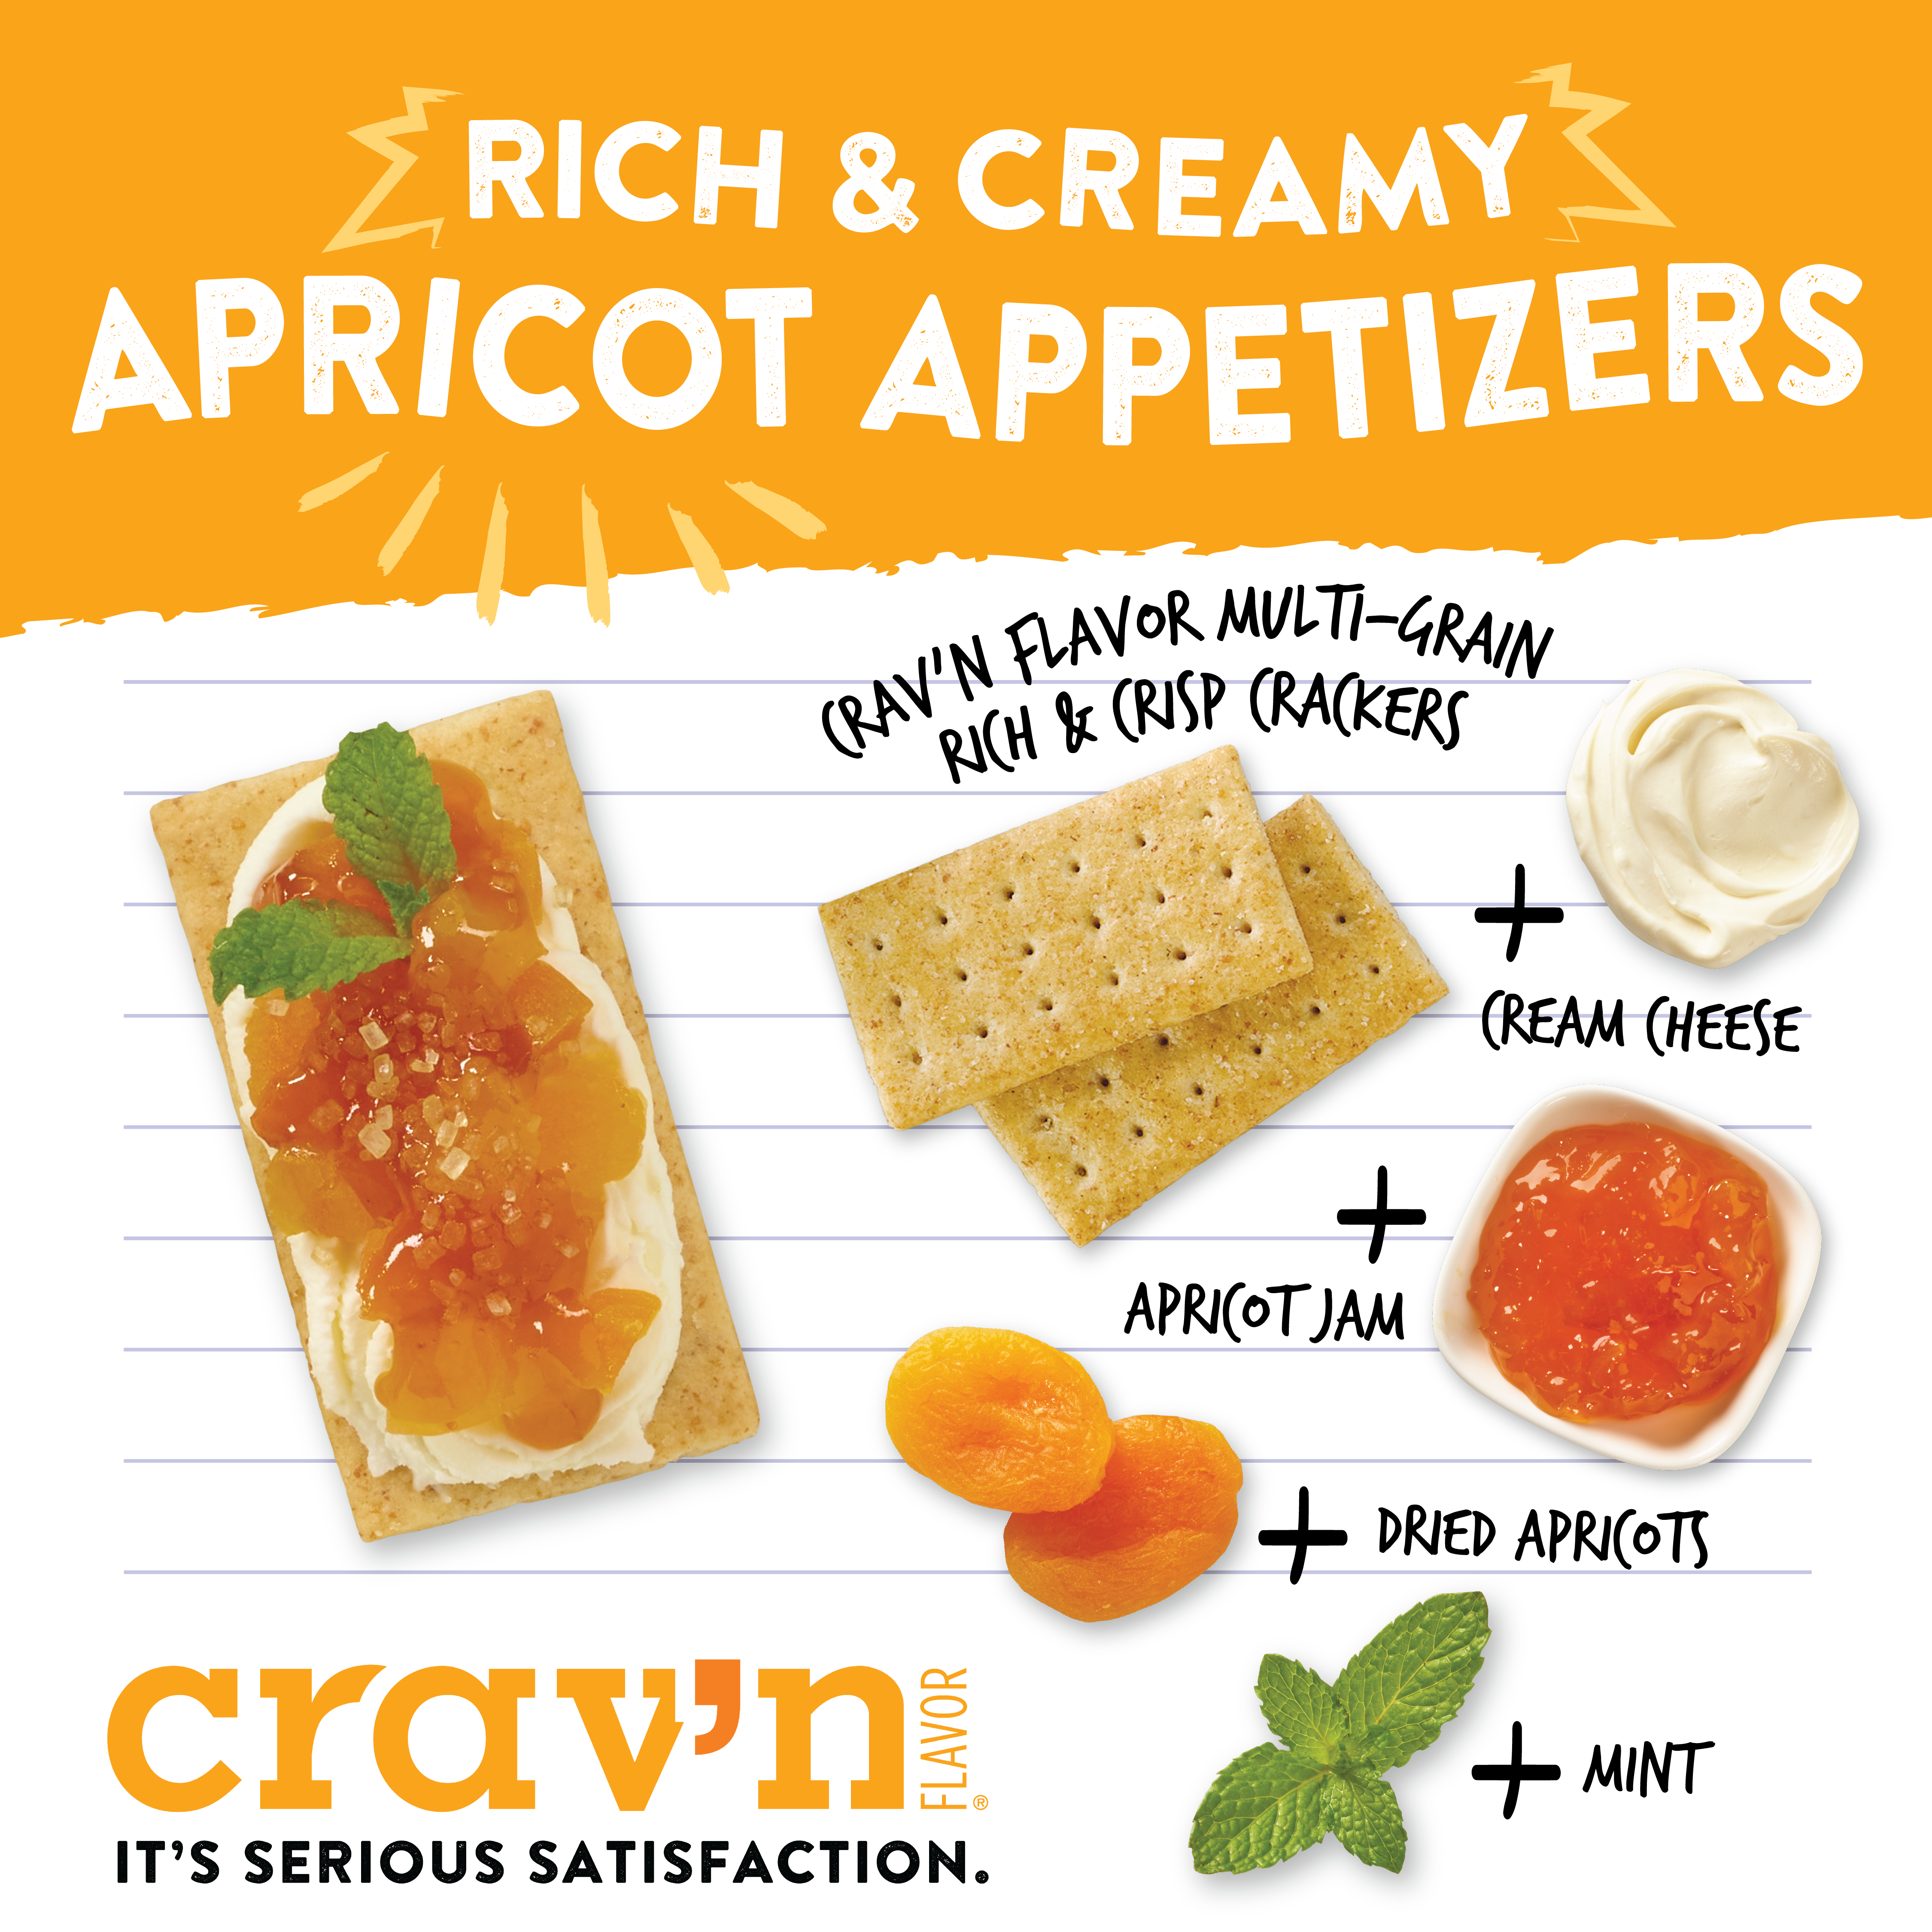 Rich & Creamy Apricot Appetizers